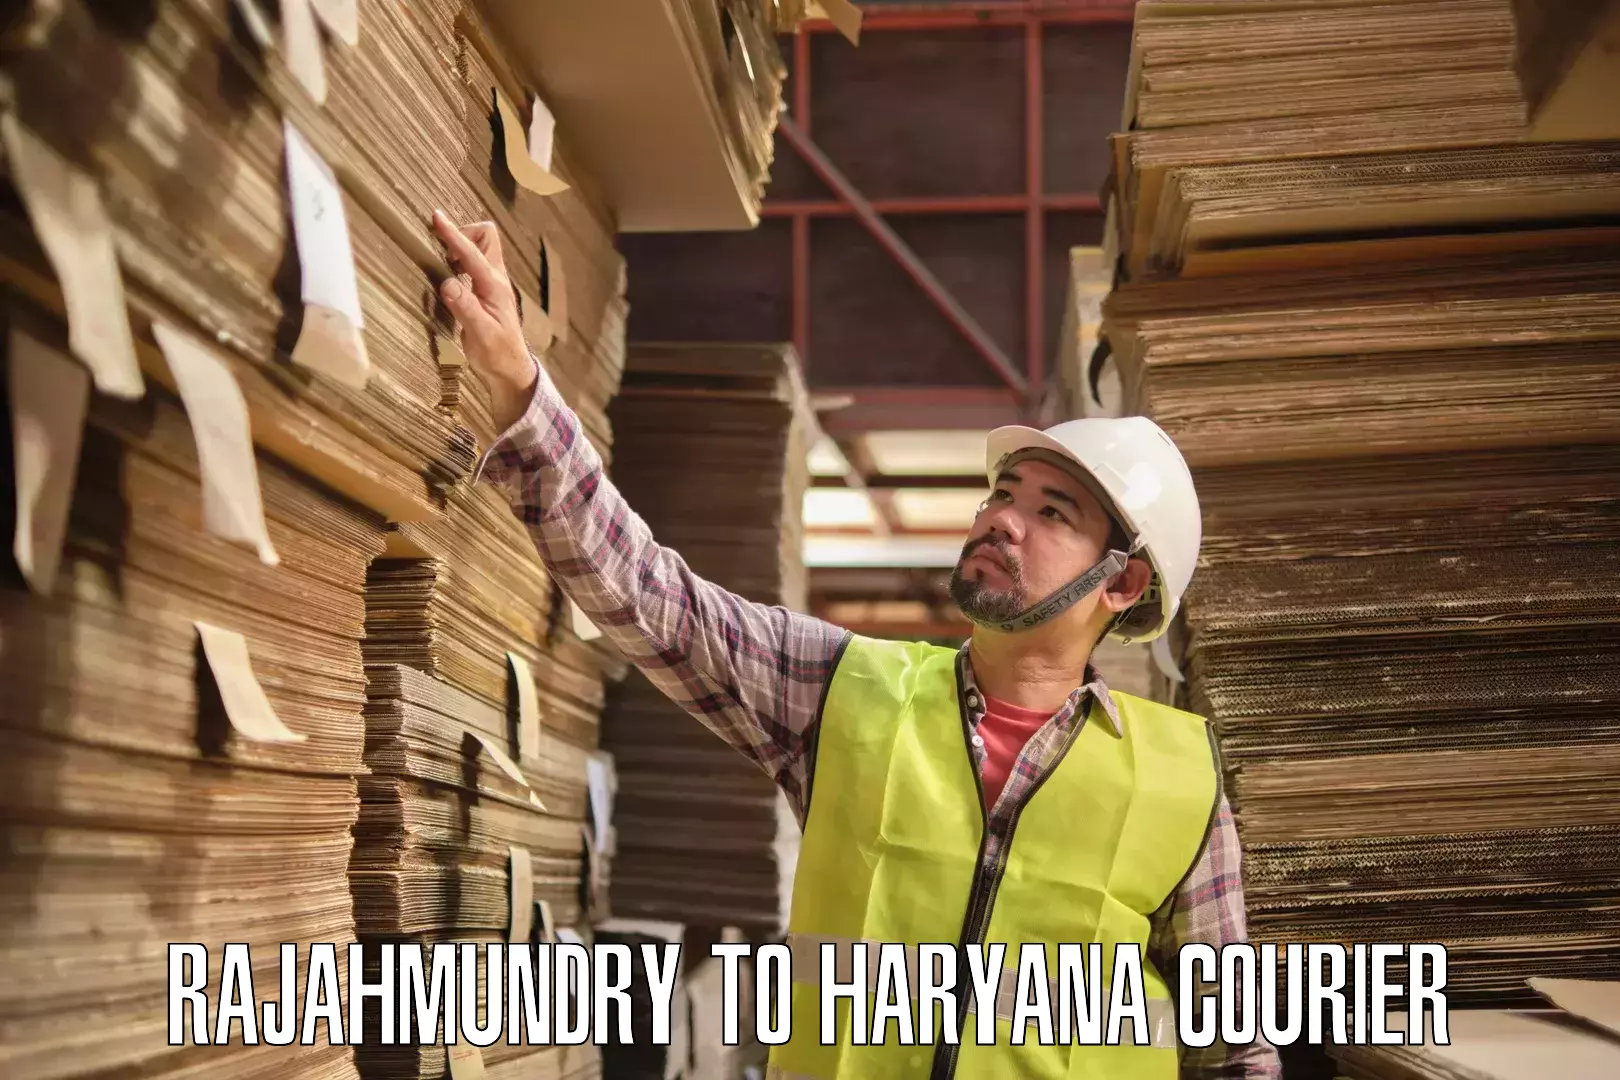 Courier service efficiency Rajahmundry to Chirya